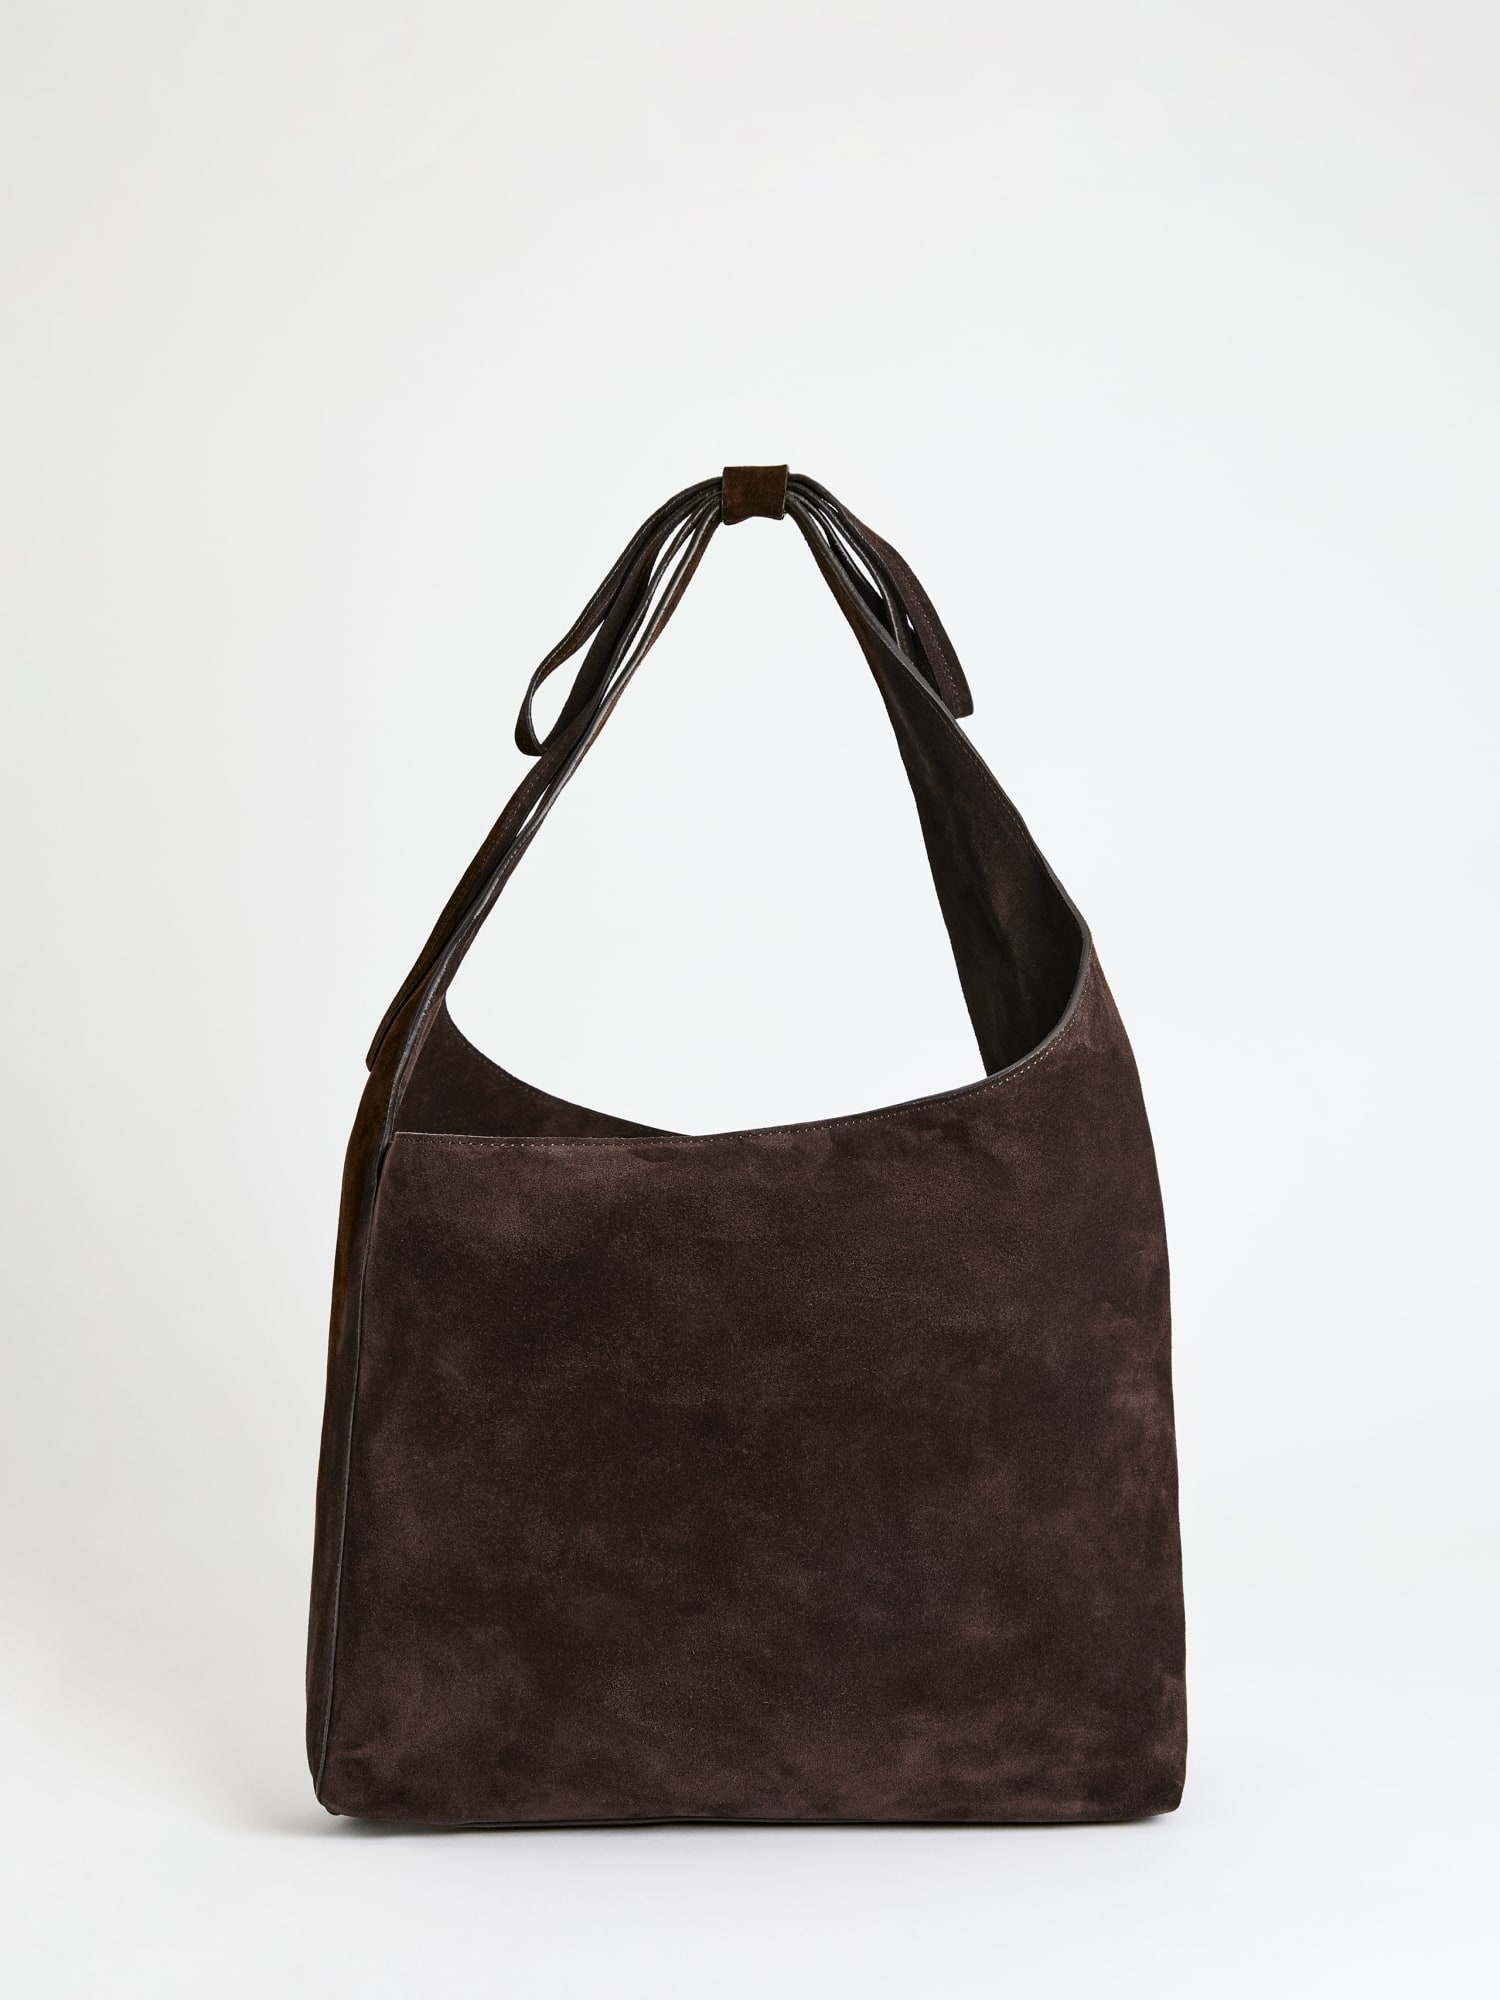 Medium leather bag